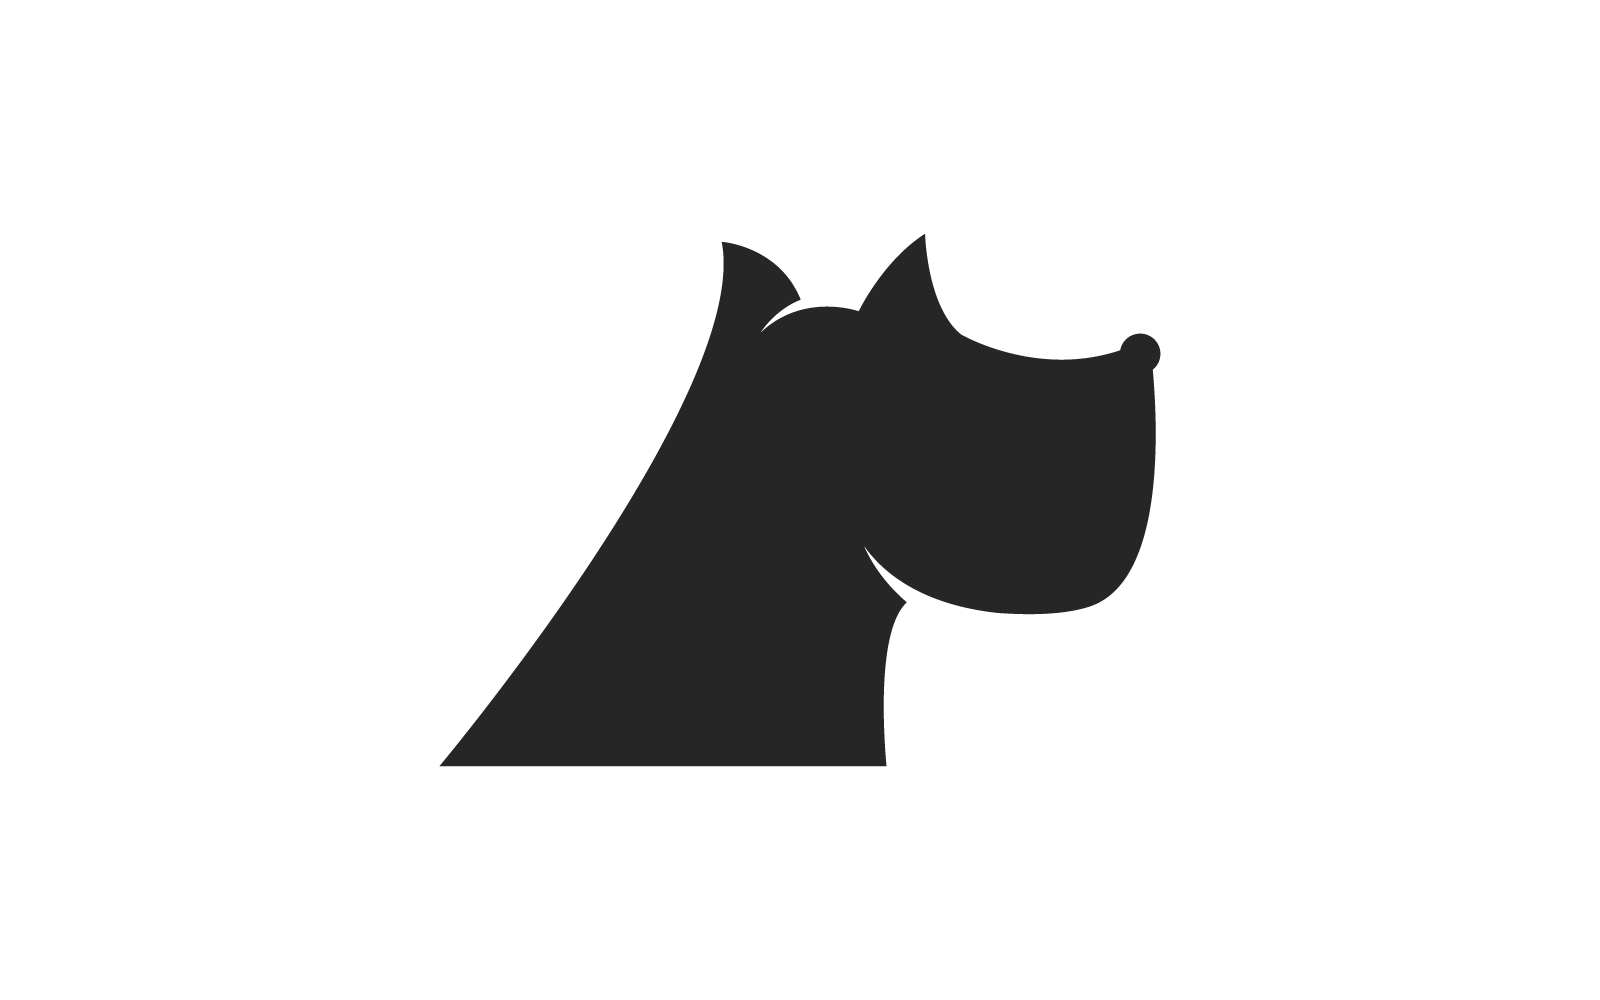 Psí hlava logo ilustrace plochý design